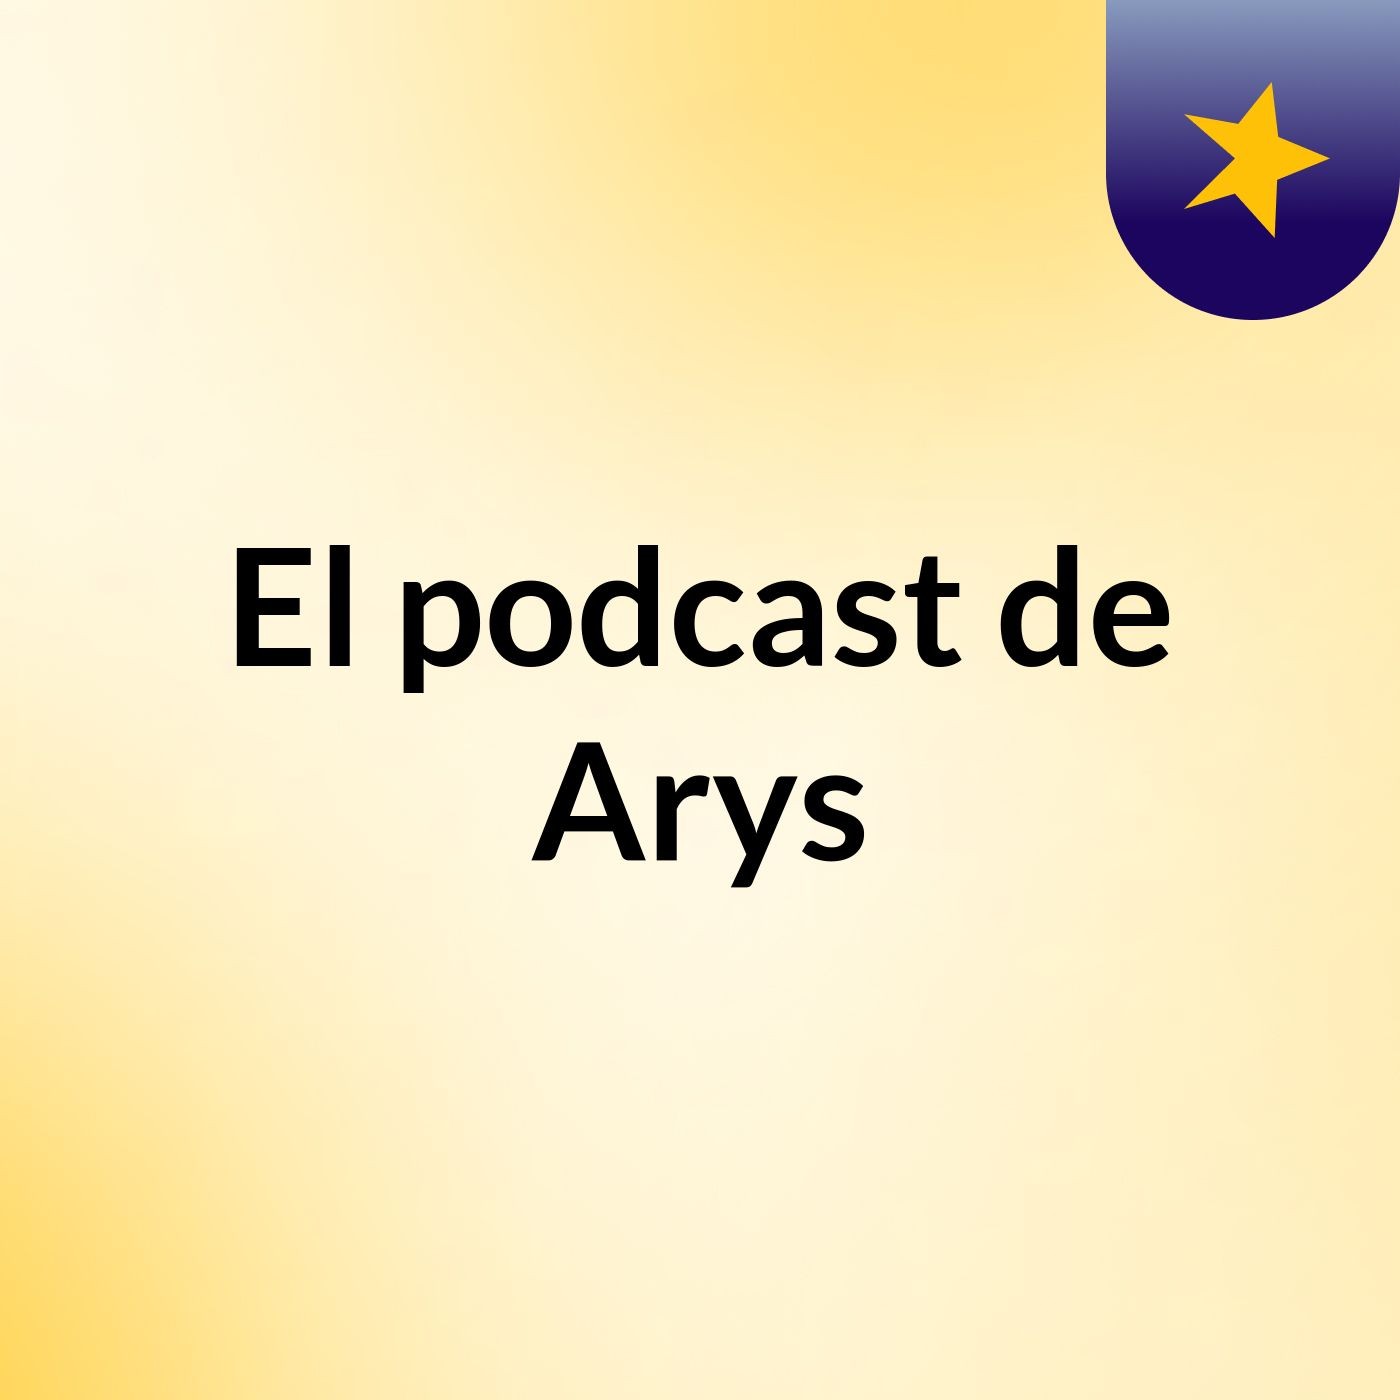 El podcast de Arys